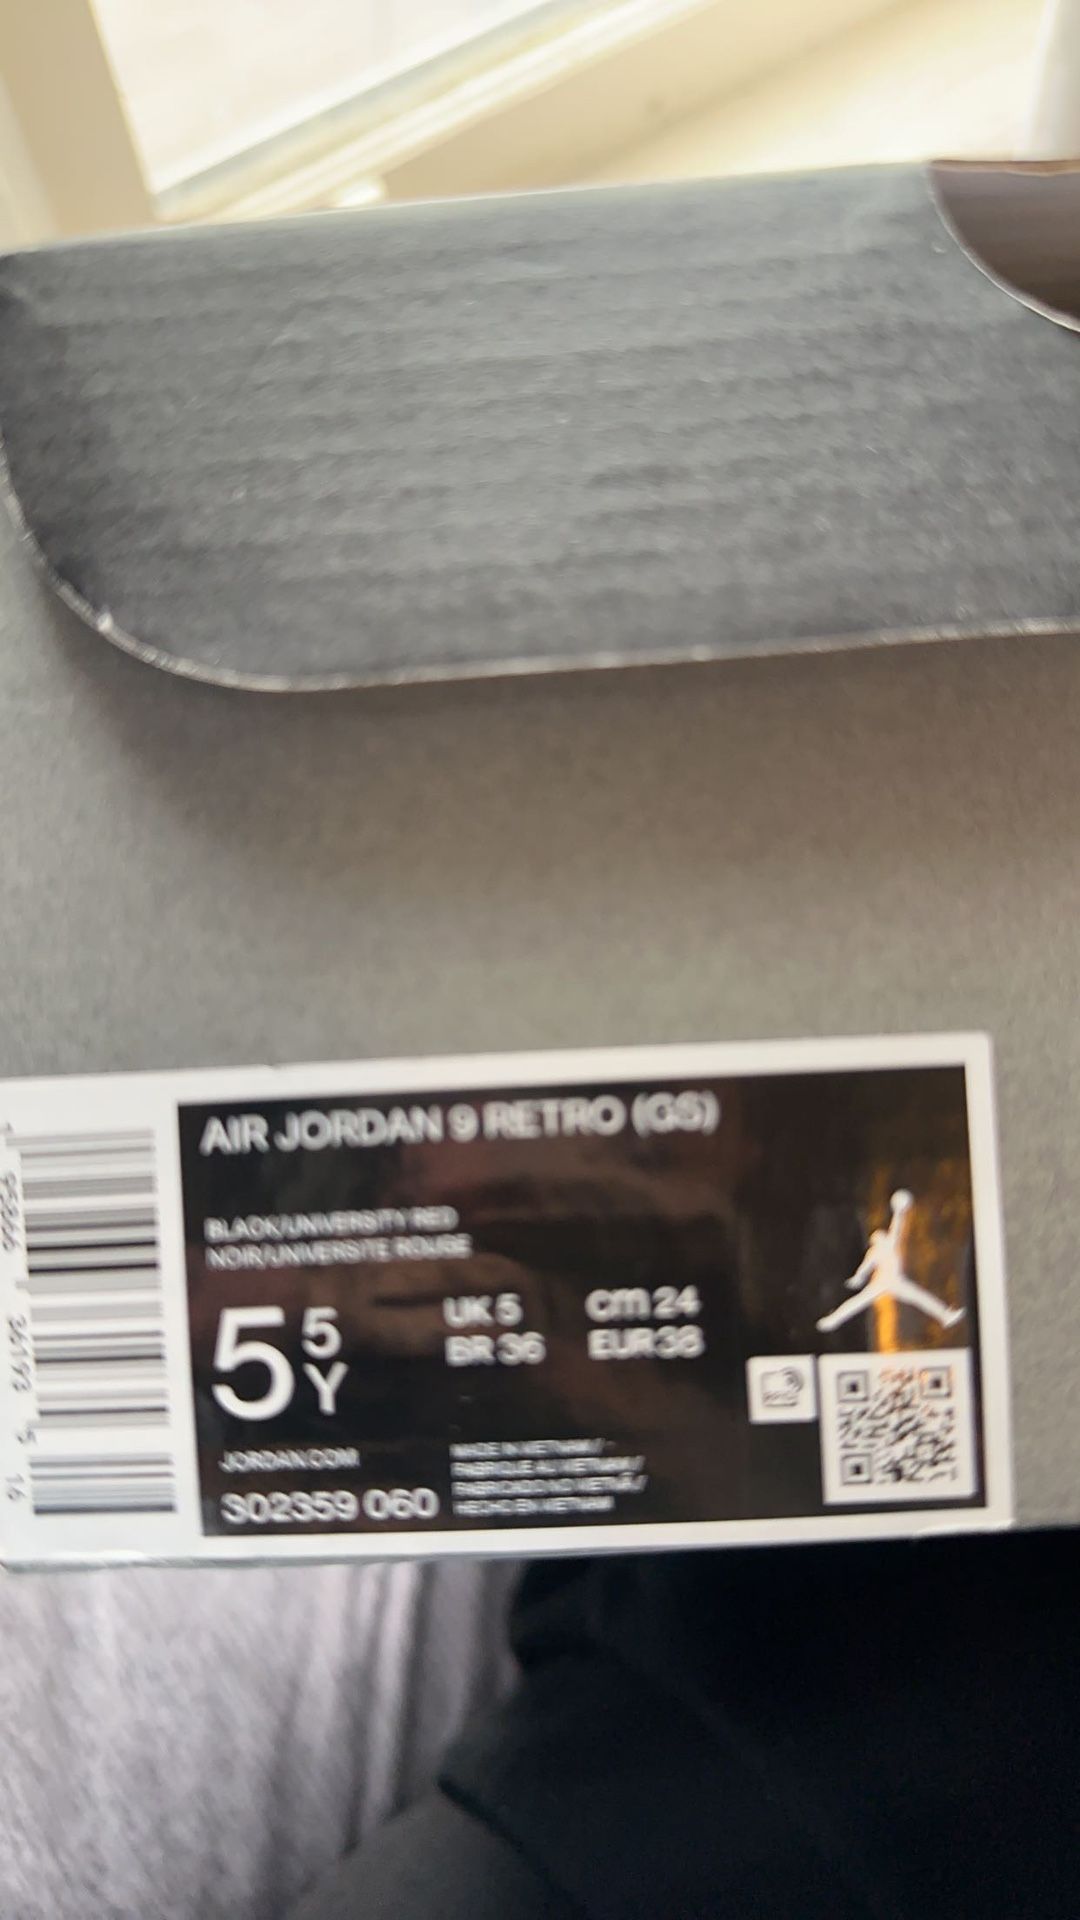 Air Jordan 9 Retro BRAND NEW NEVER WORN Sz 5.5(GS)